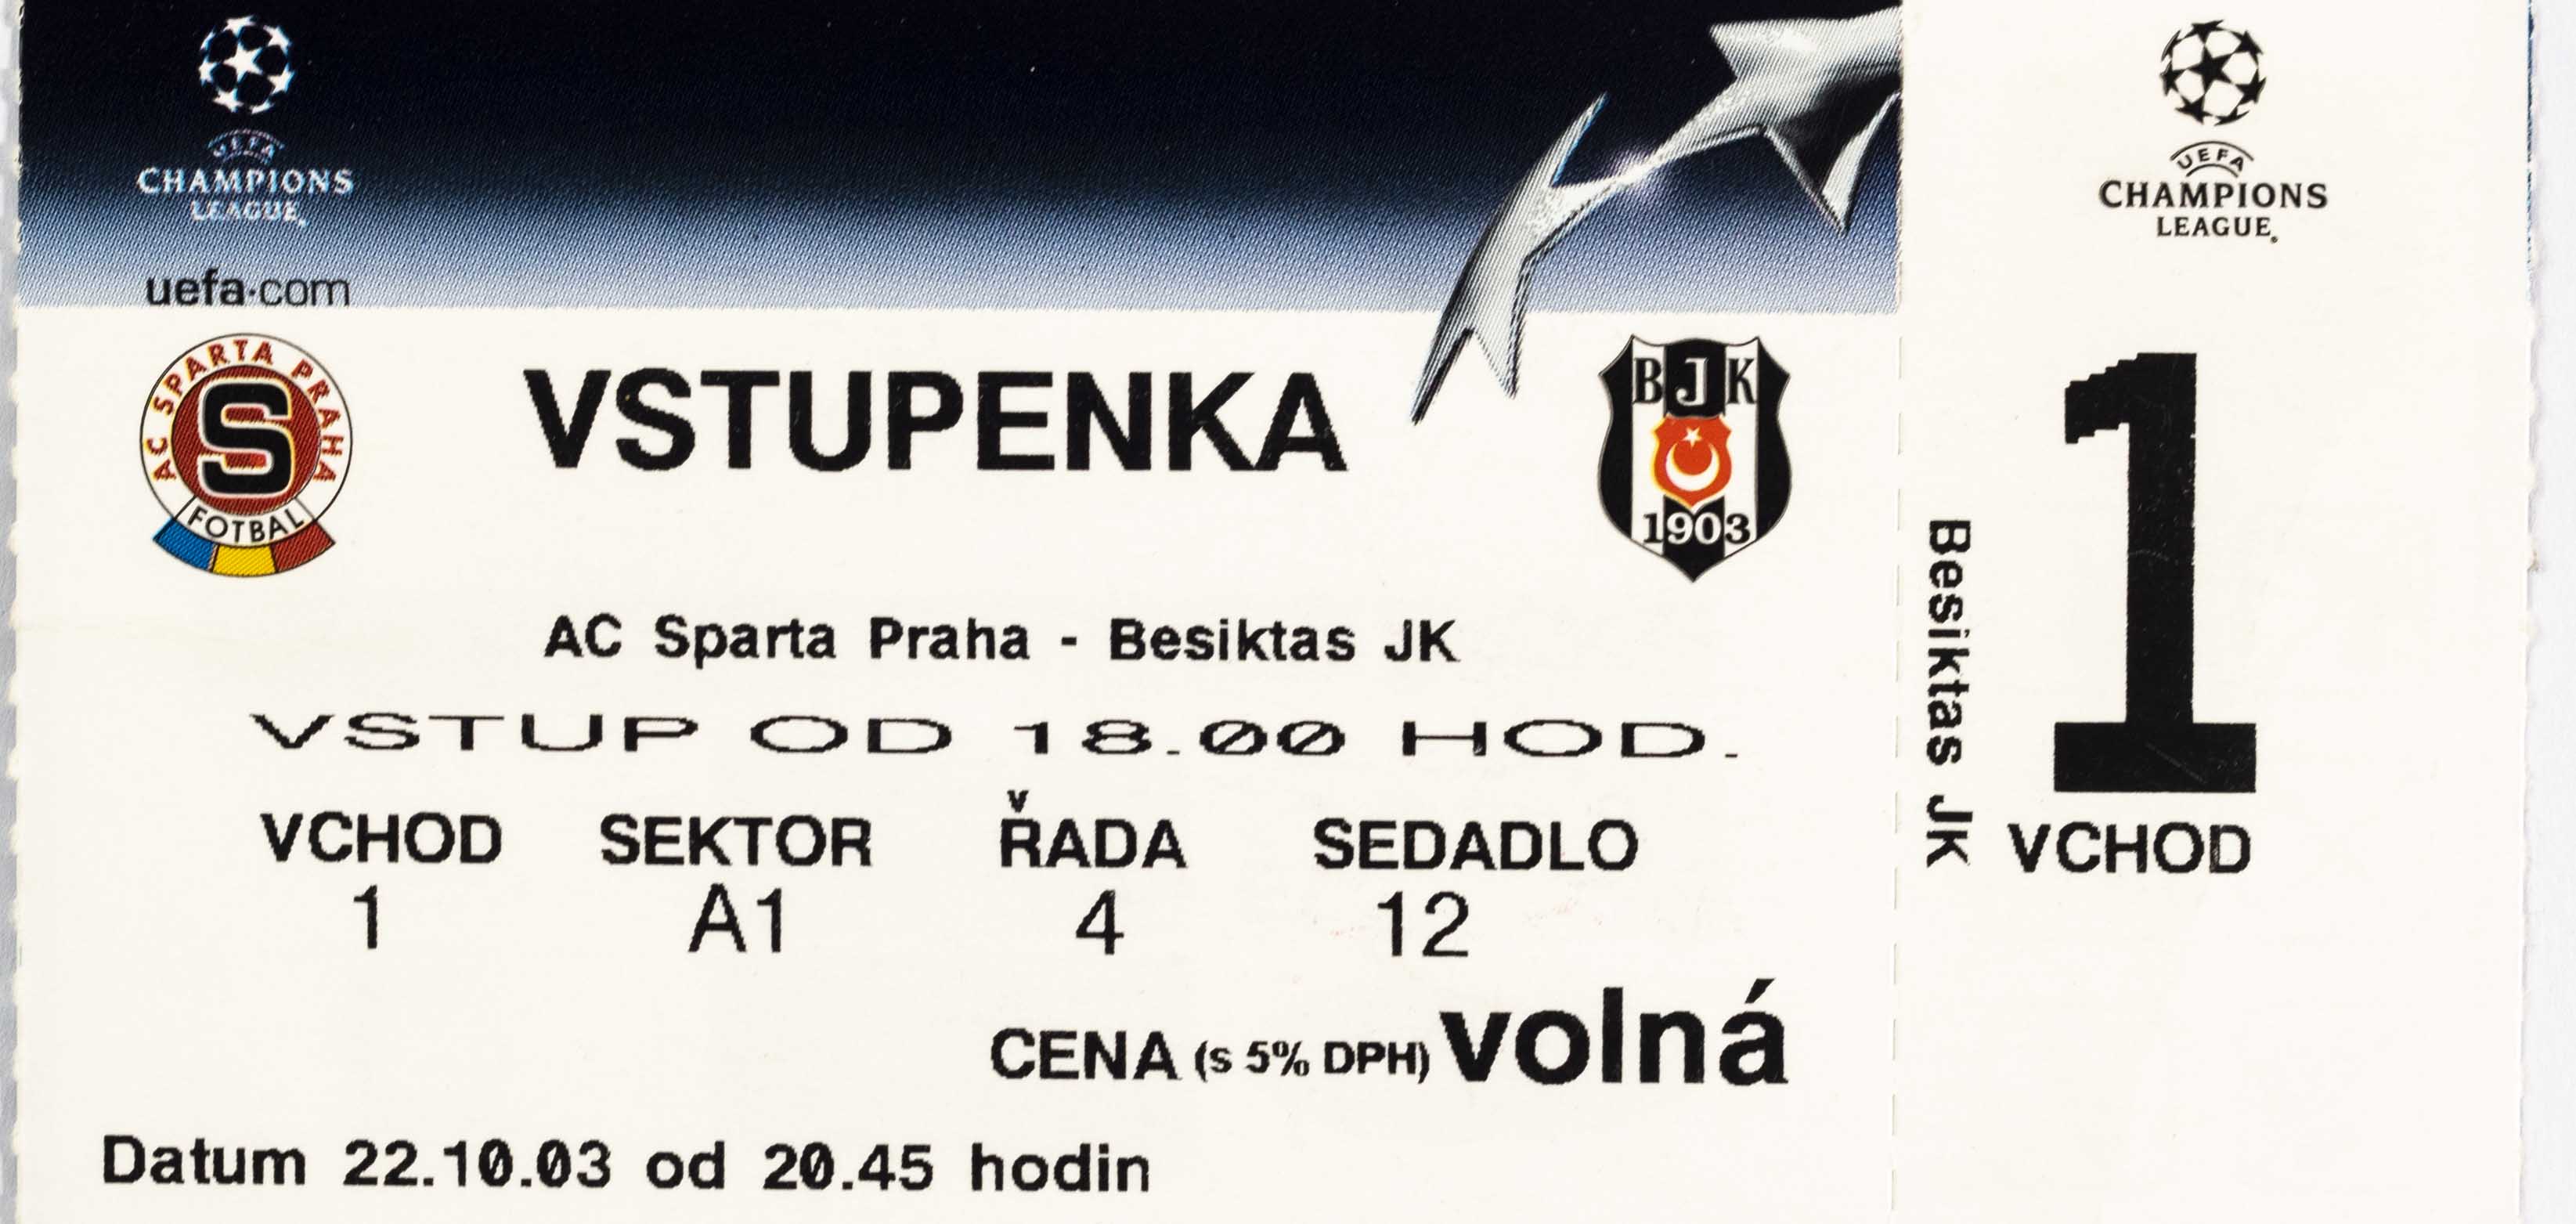 Vstupenka fotbal, AC Sparta Praha v. Besiktas JK, 2003